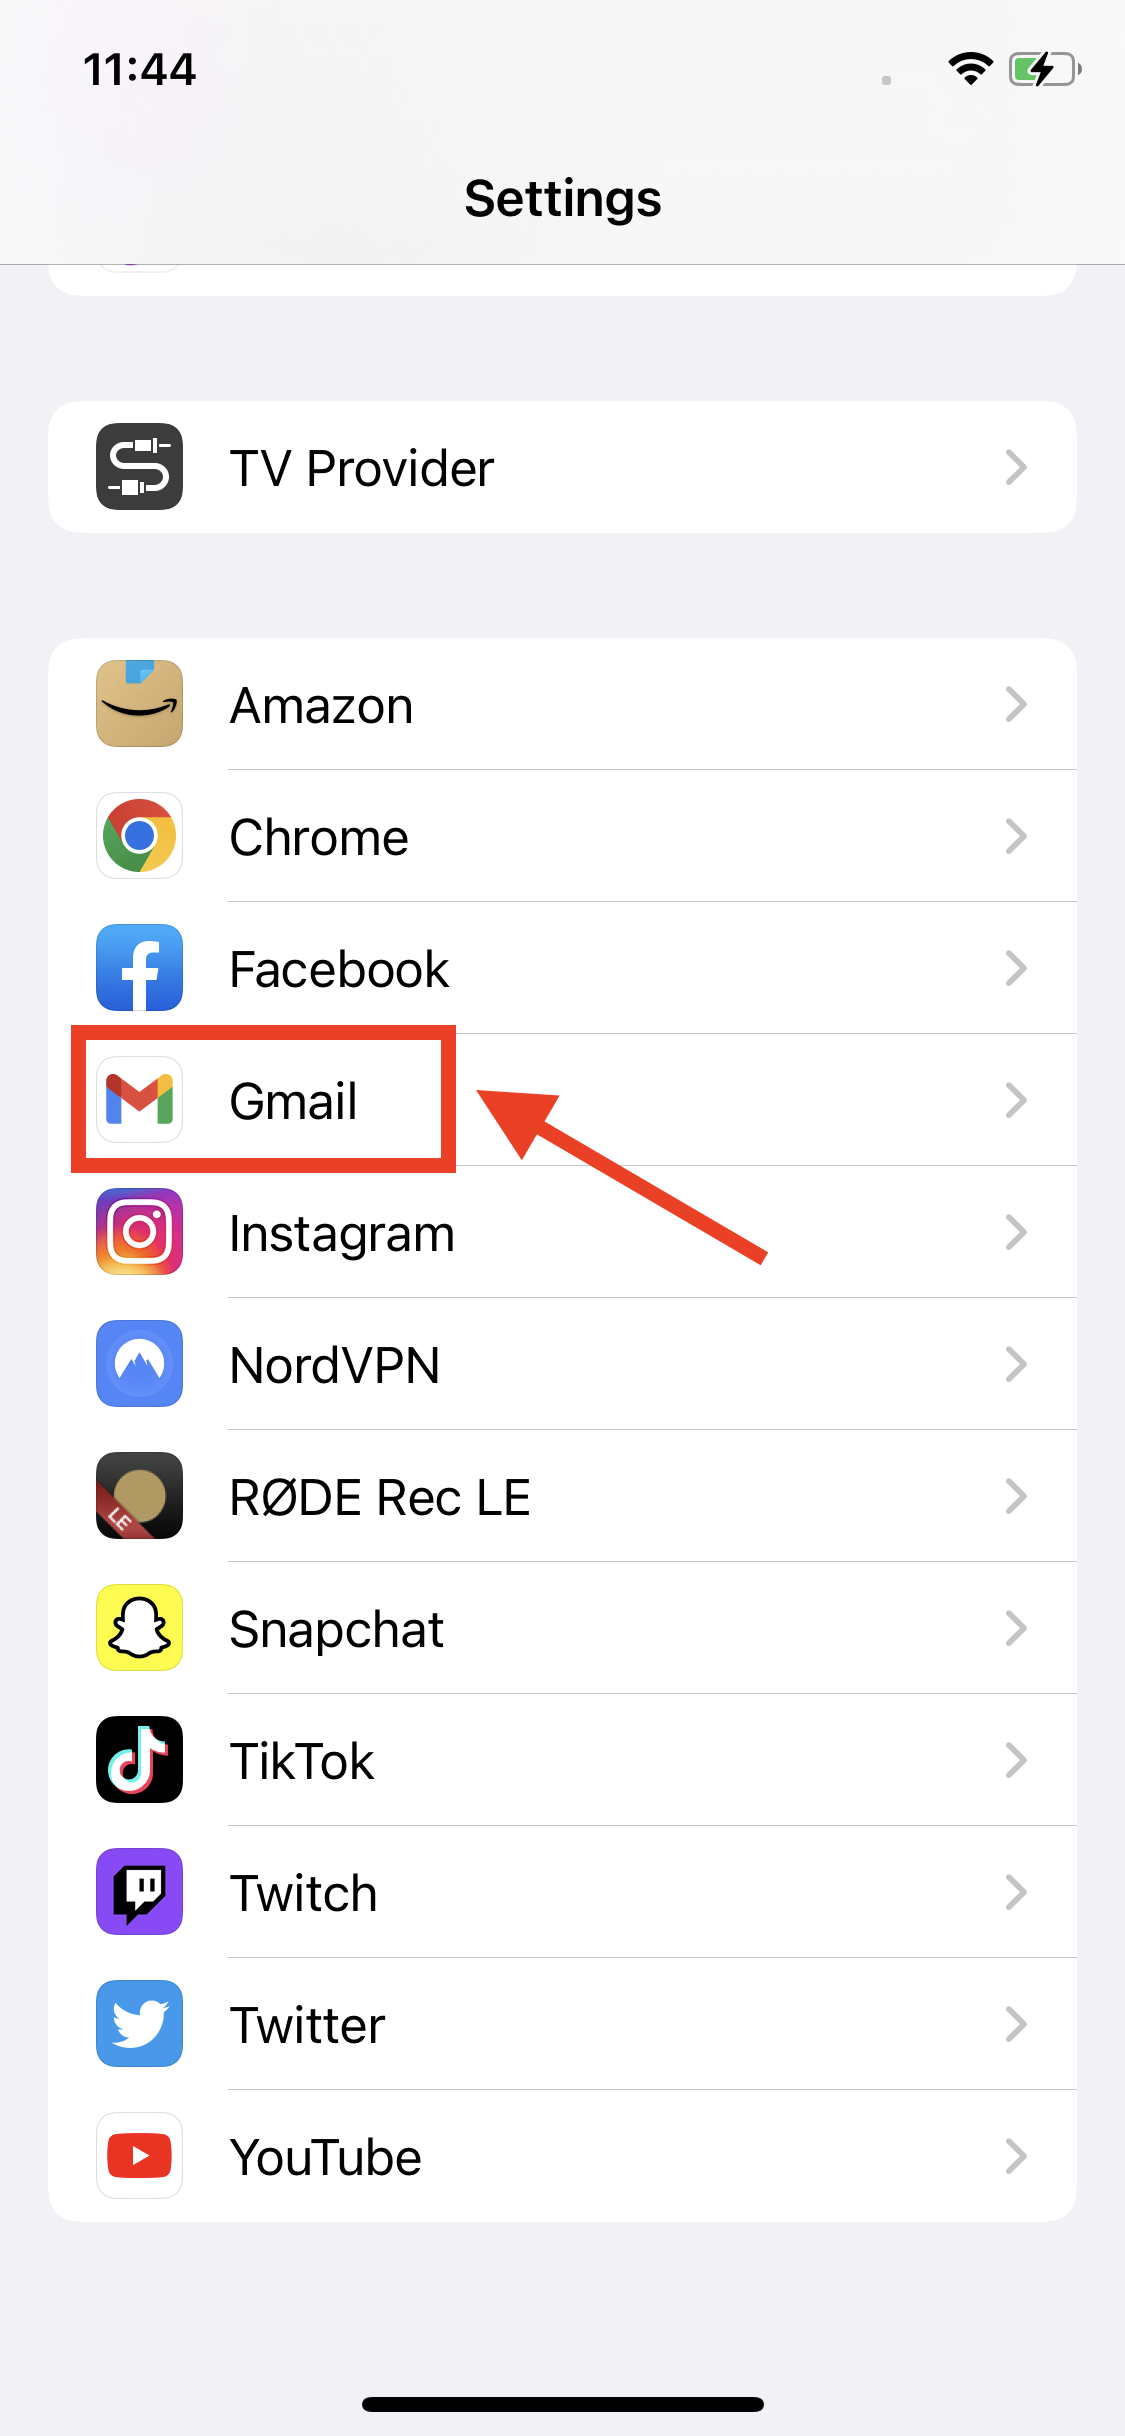 Select Gmail 